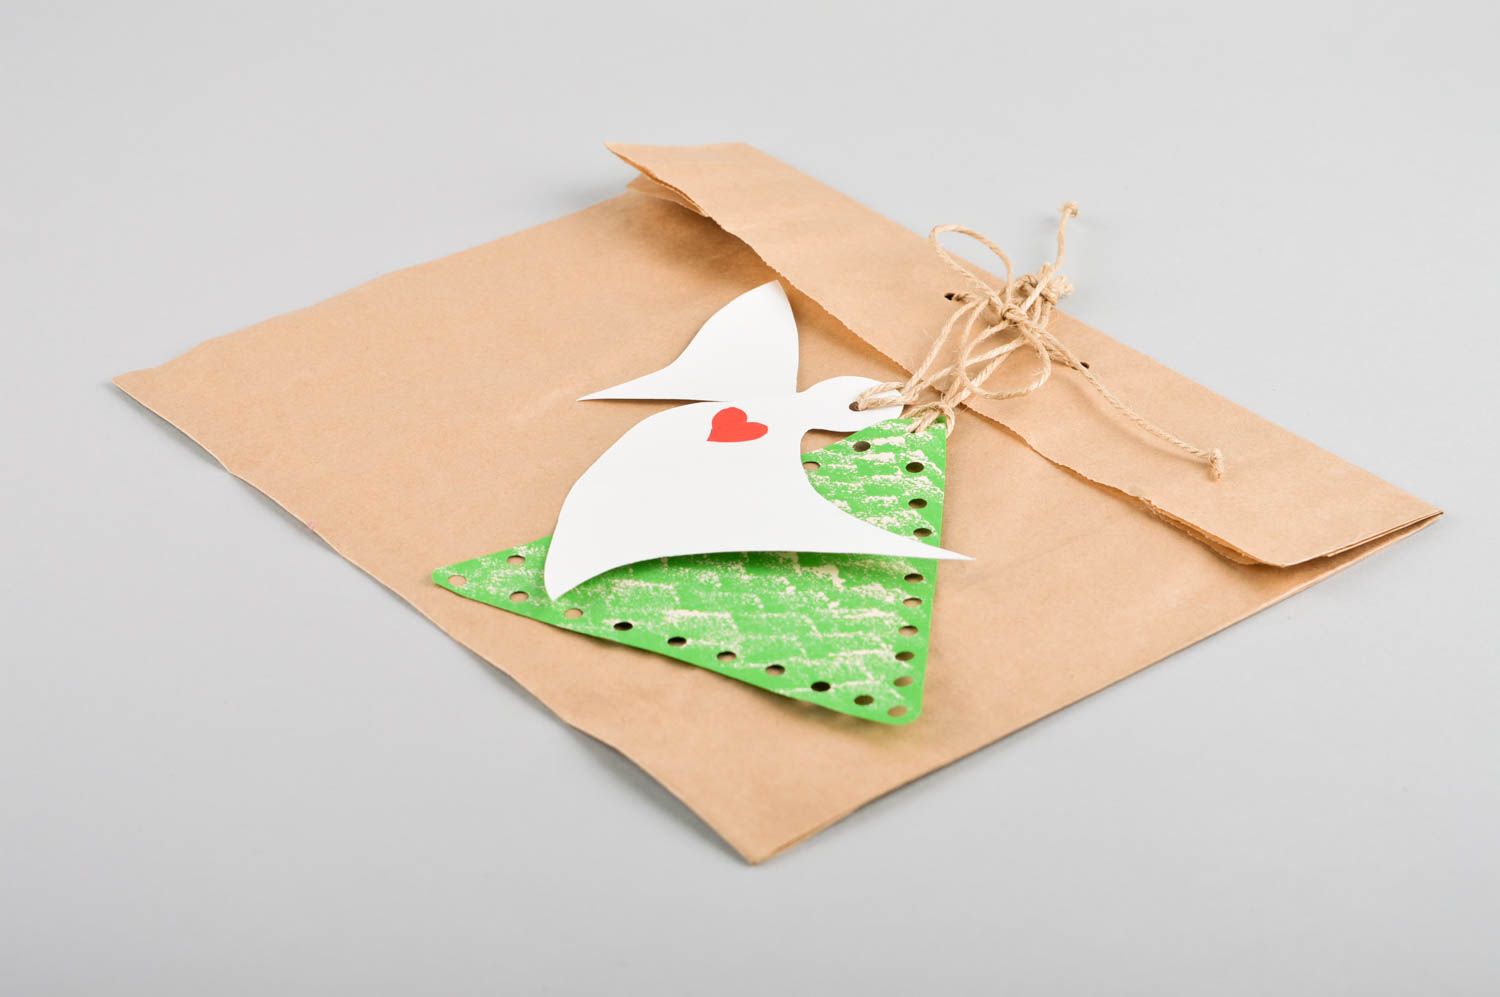 Verpackung für Geldgeschenke Geldgeschenk Idee handmade kreative Geschenkidee foto 5